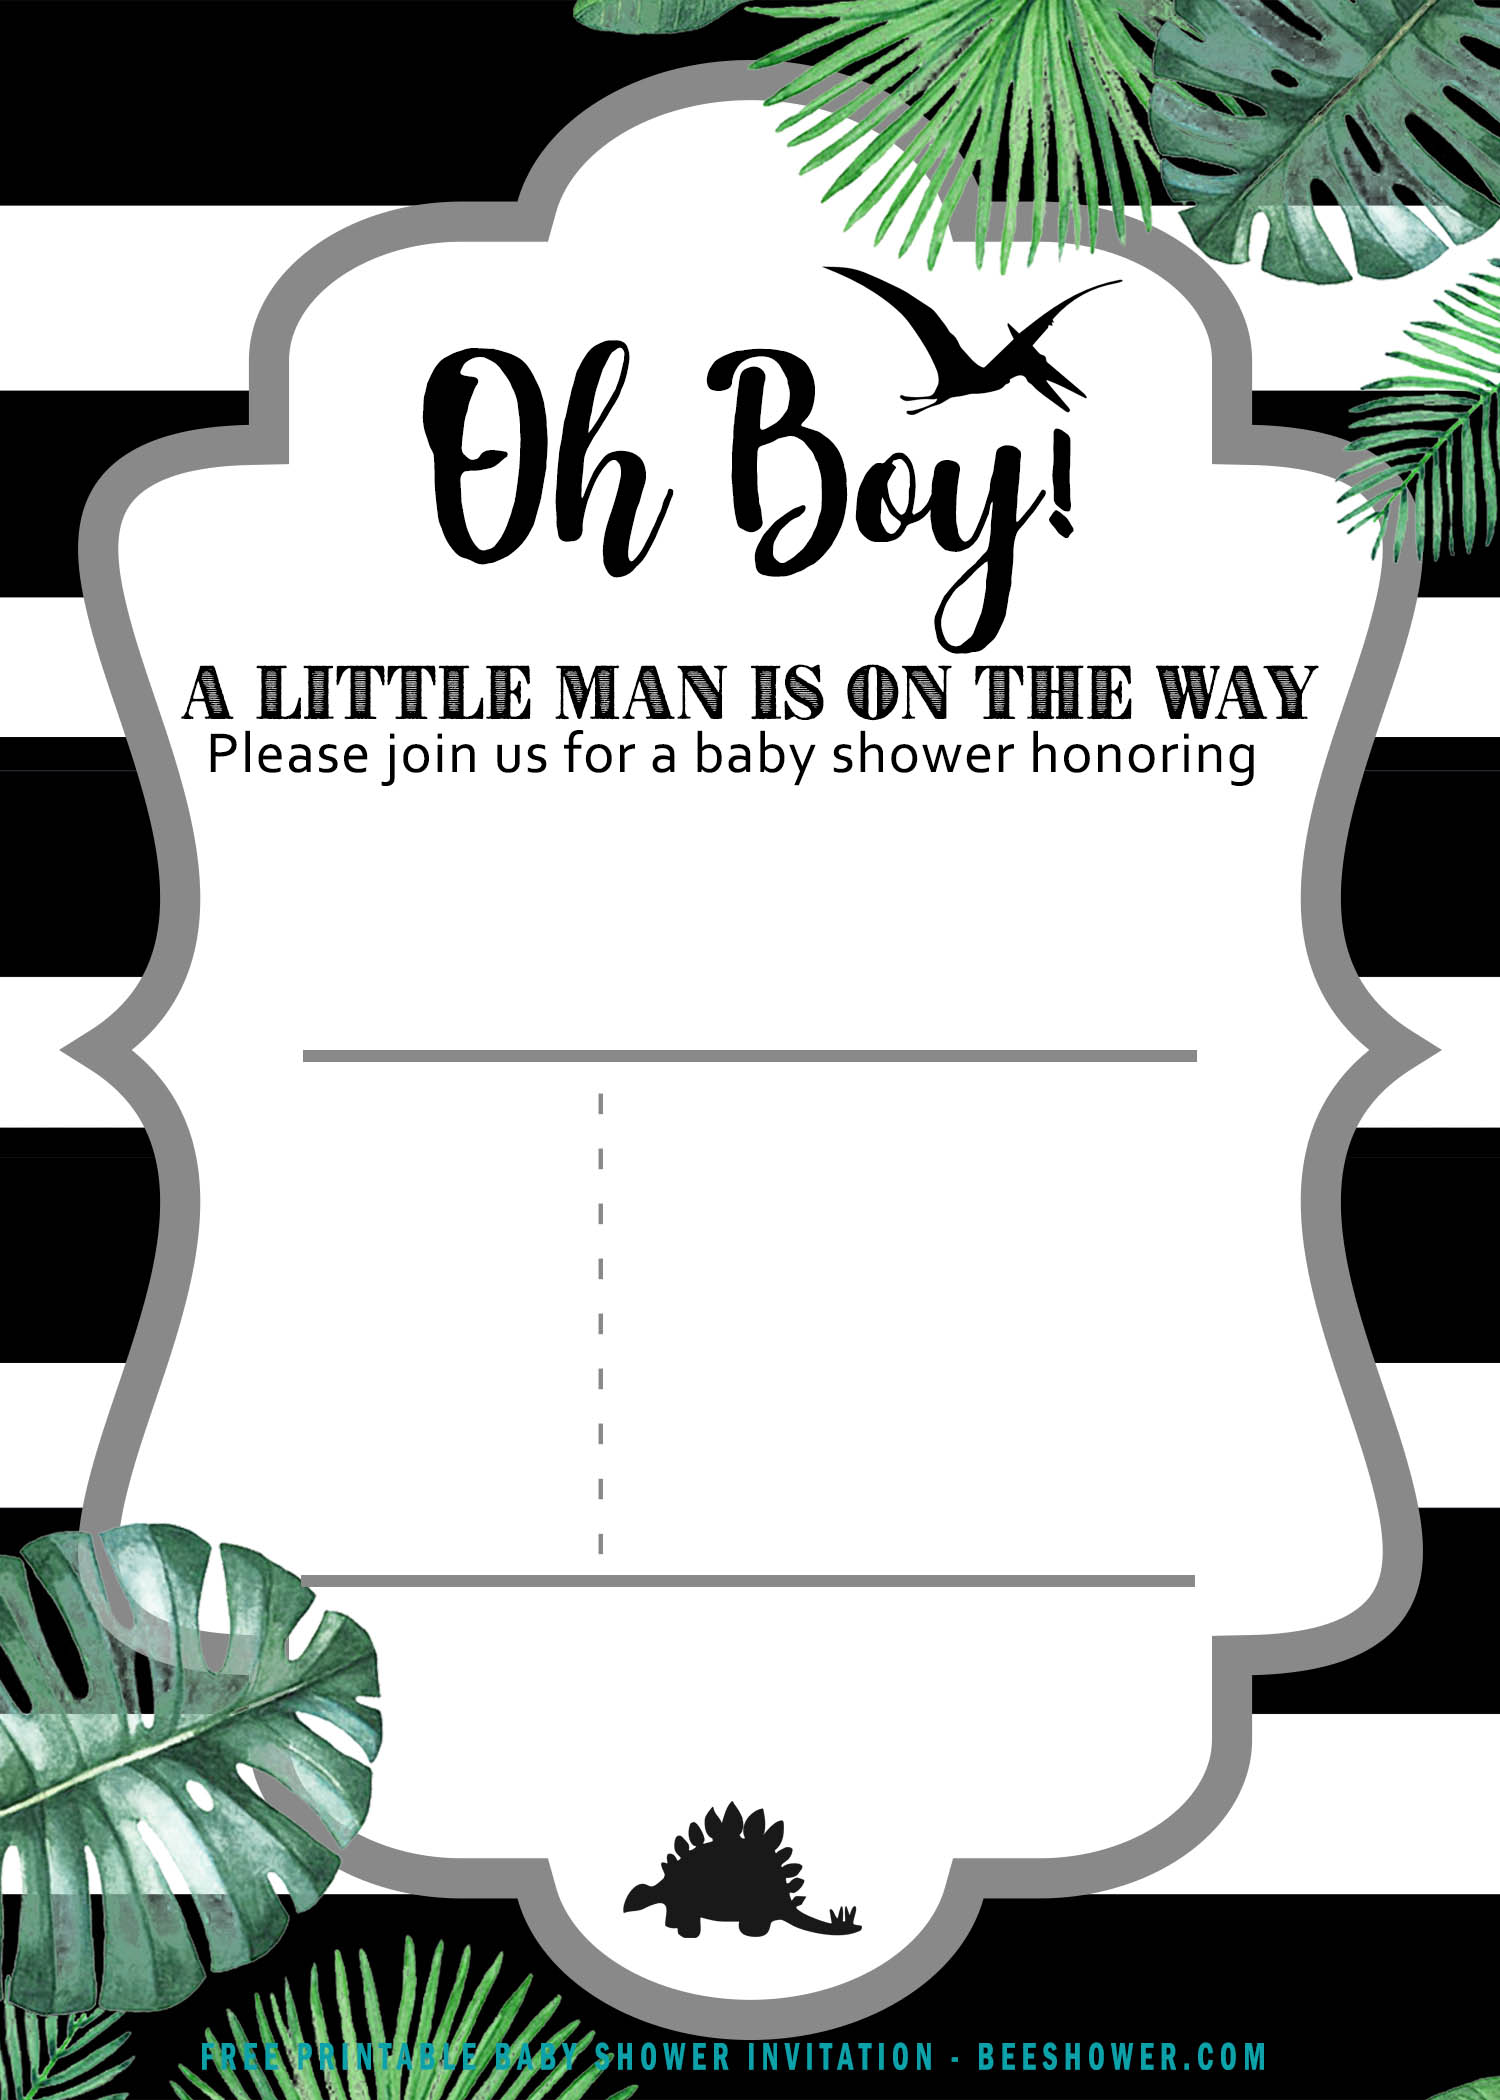 Dinosaur Baby Shower Invitation